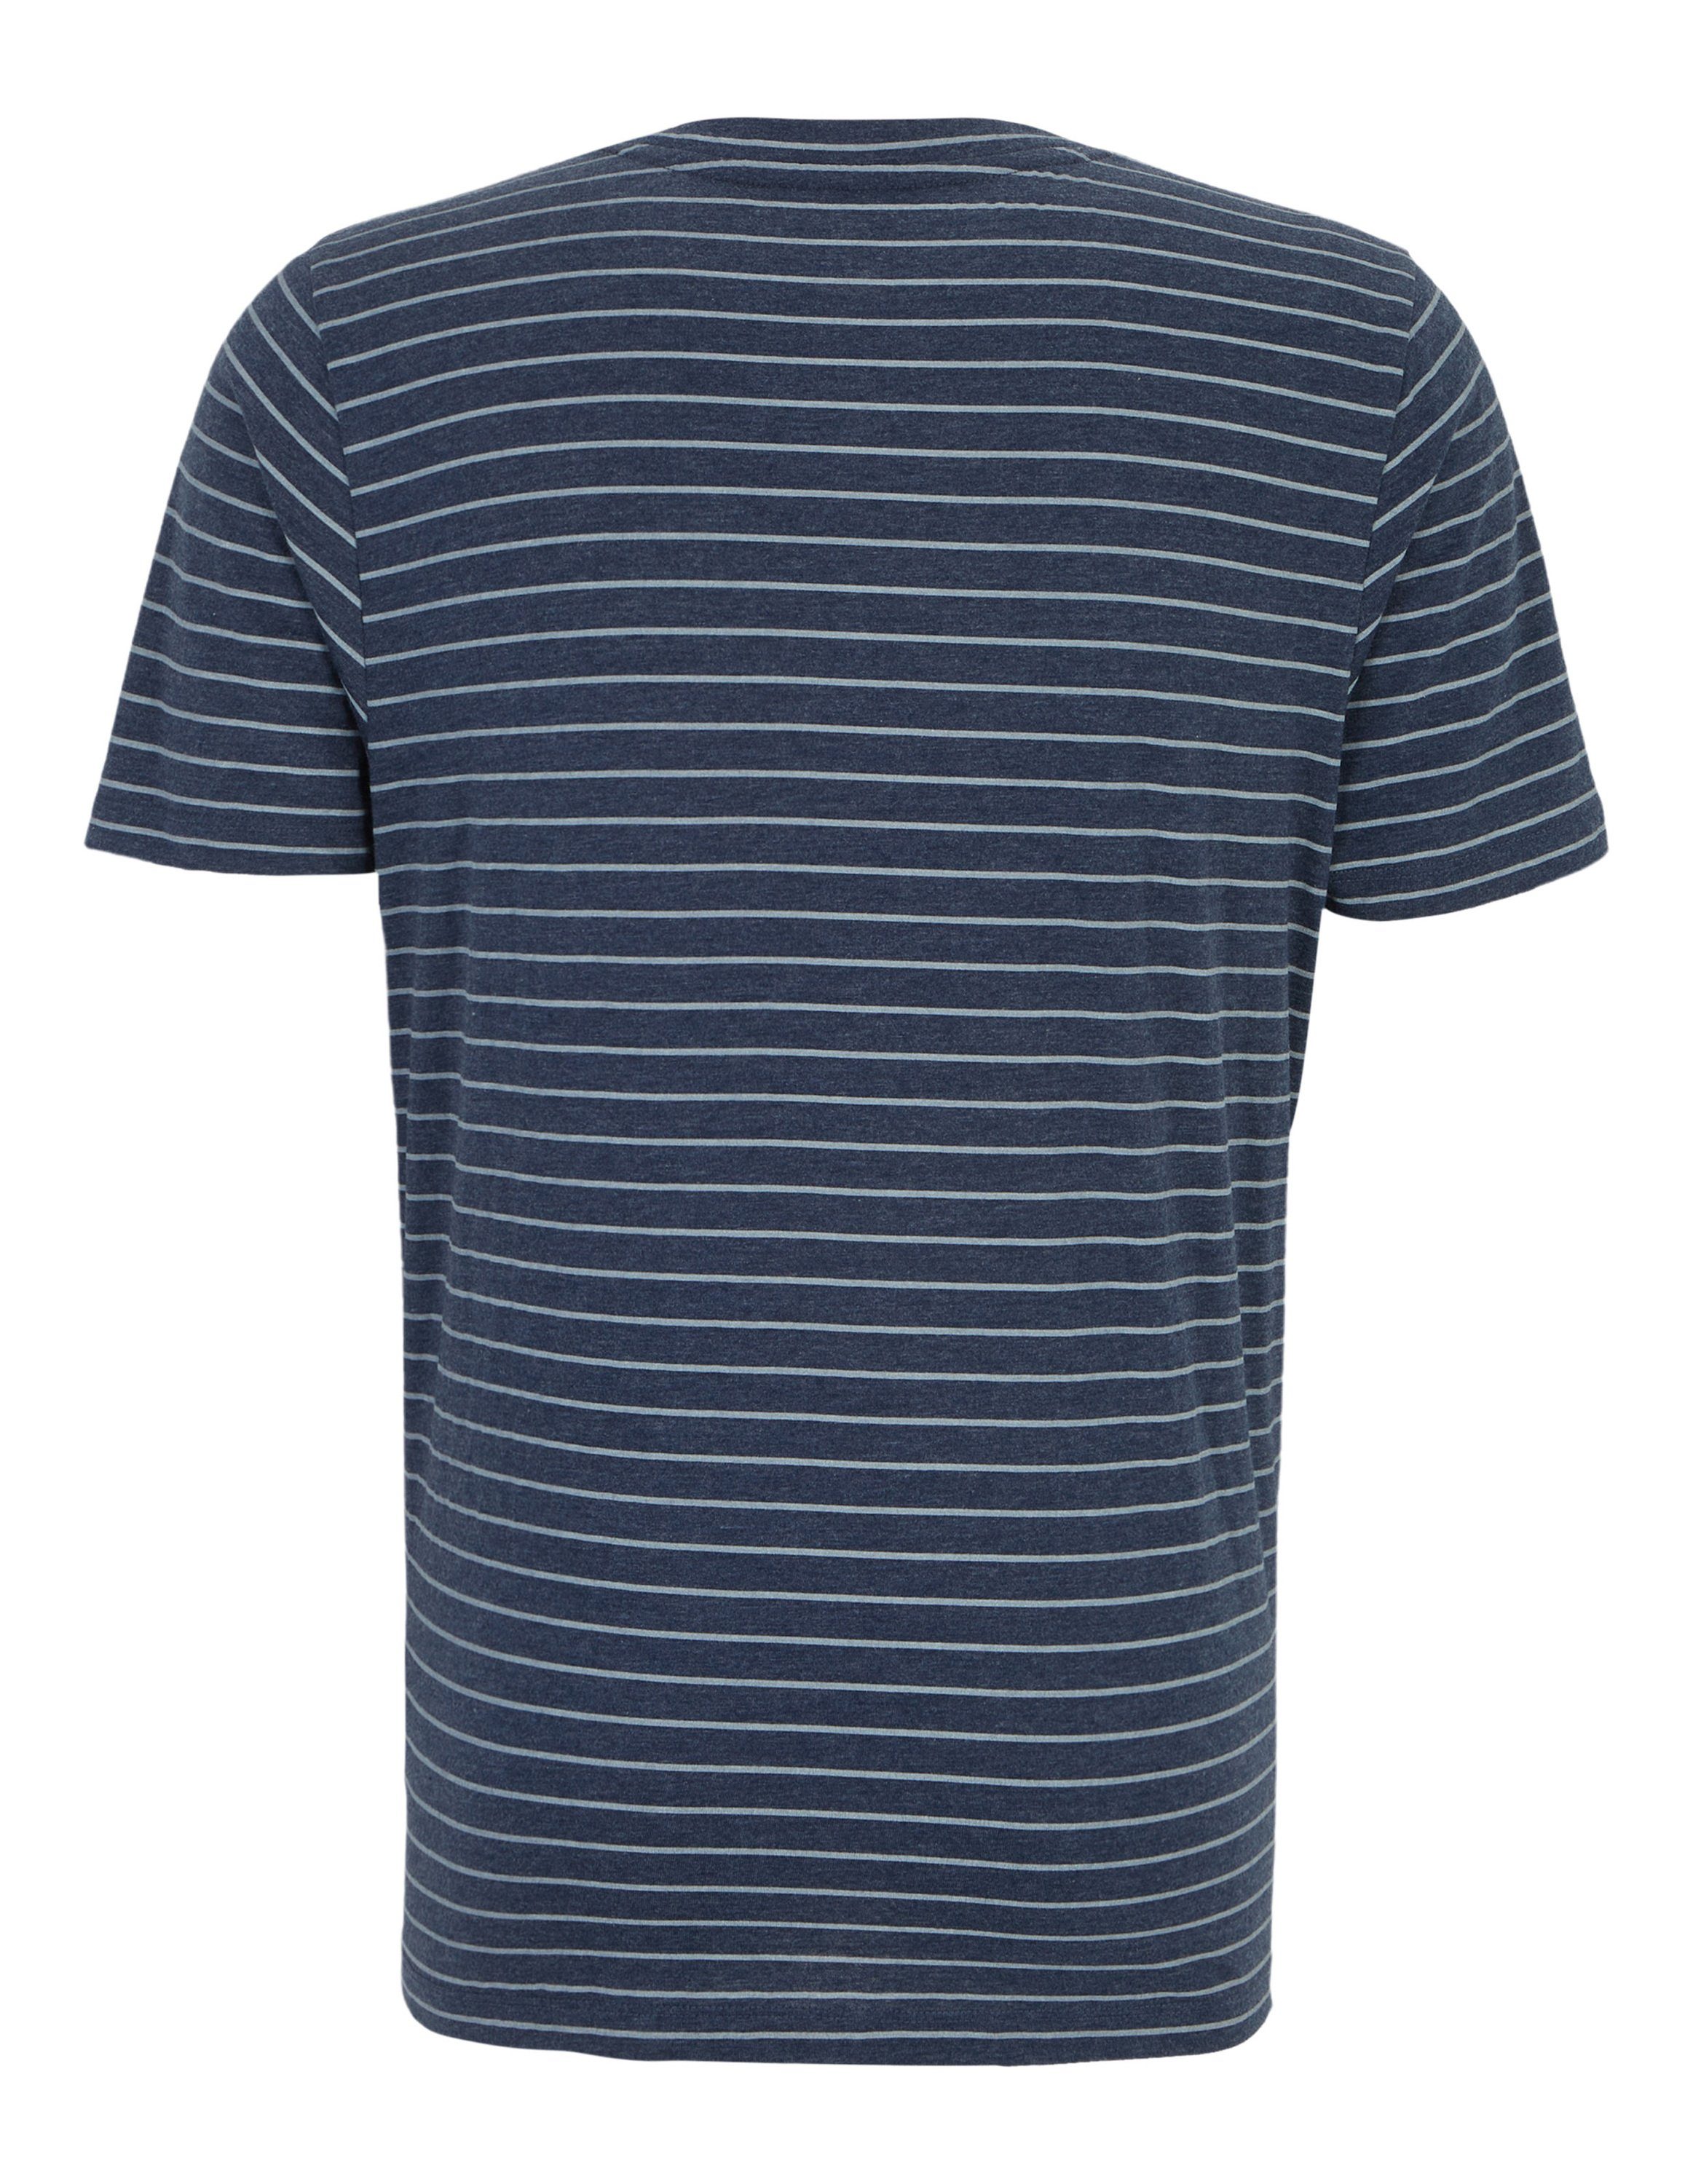 FUN JANOSCH marine & Sportswear Joy T-Shirt JOY T-Shirt stripes